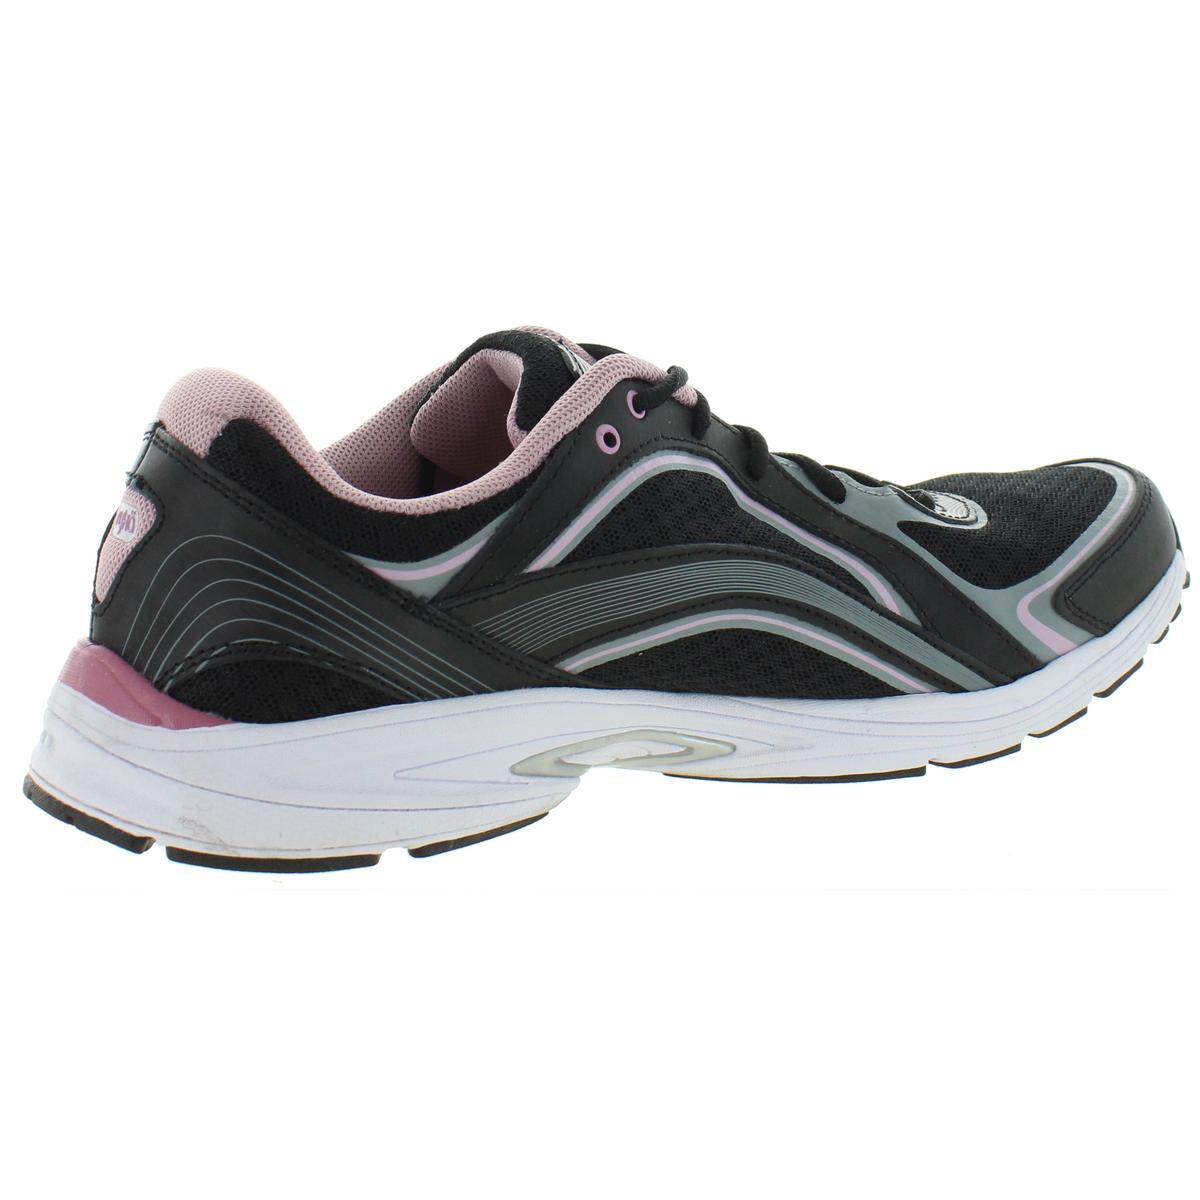 Ryka Womens Sky Walk Mesh Trainers Athletic Walking Shoes Sneakers BHFO  2381